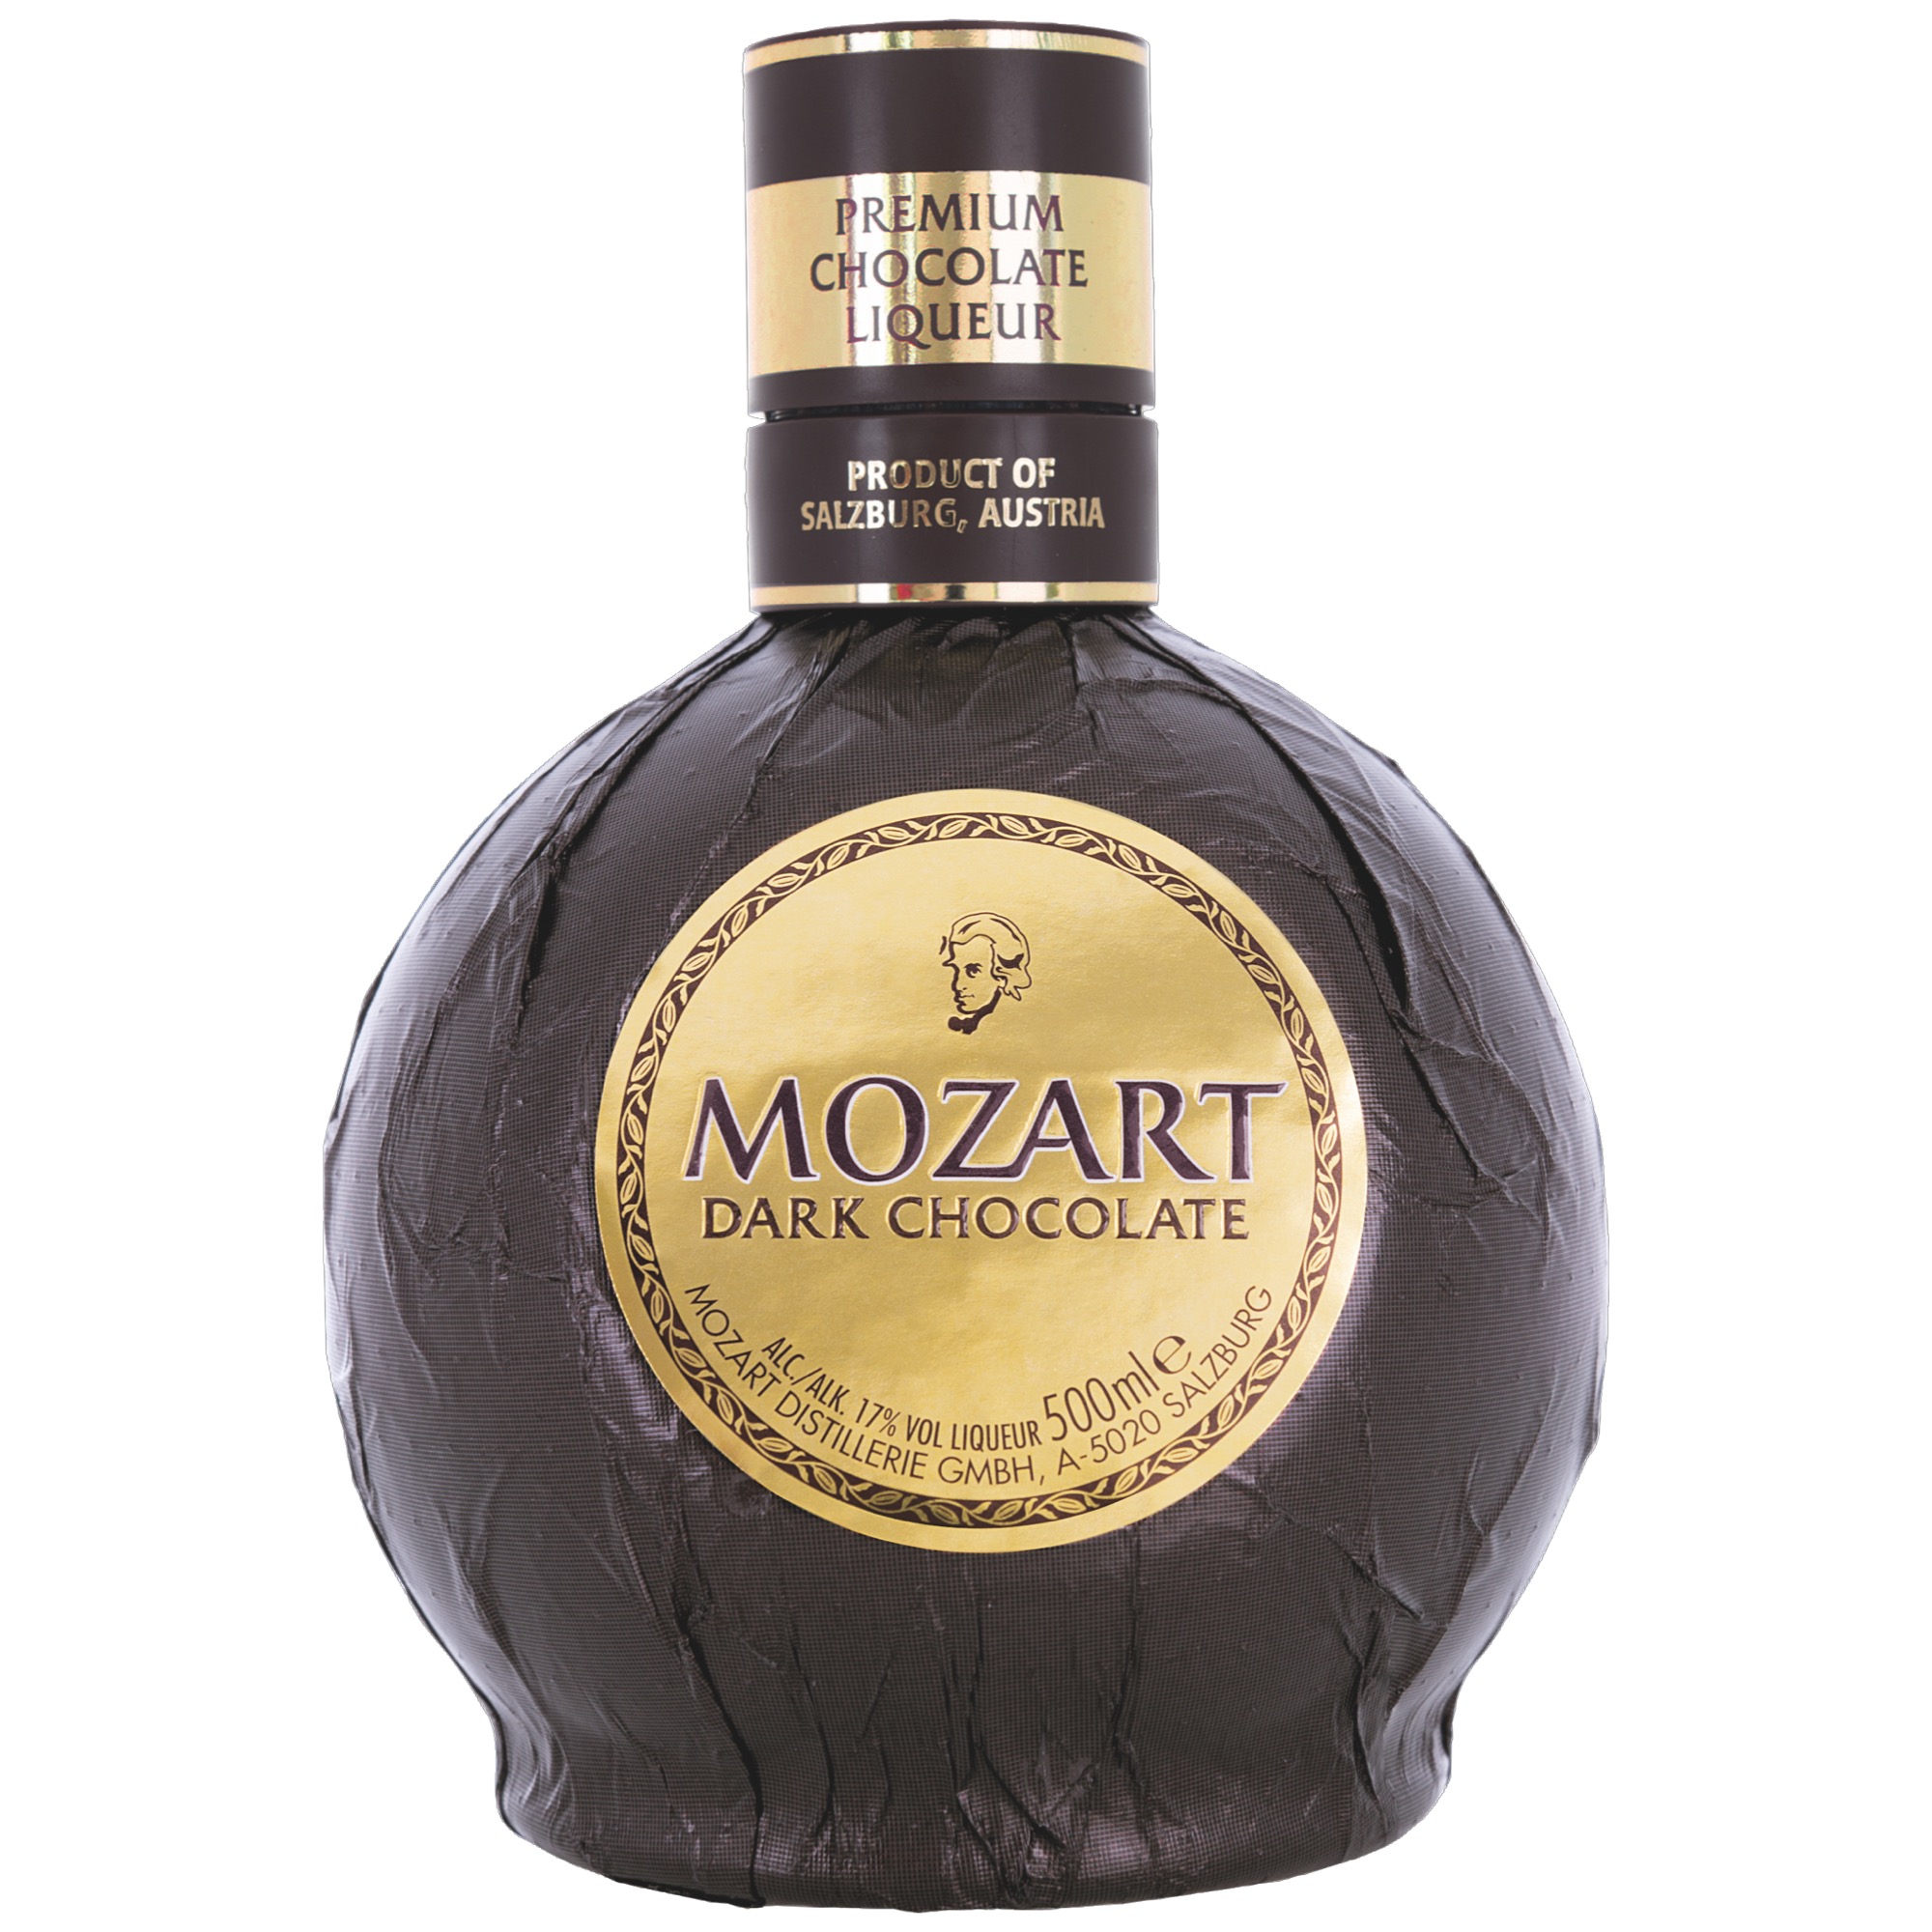 Mozart likér 0,5l, Black Choco.